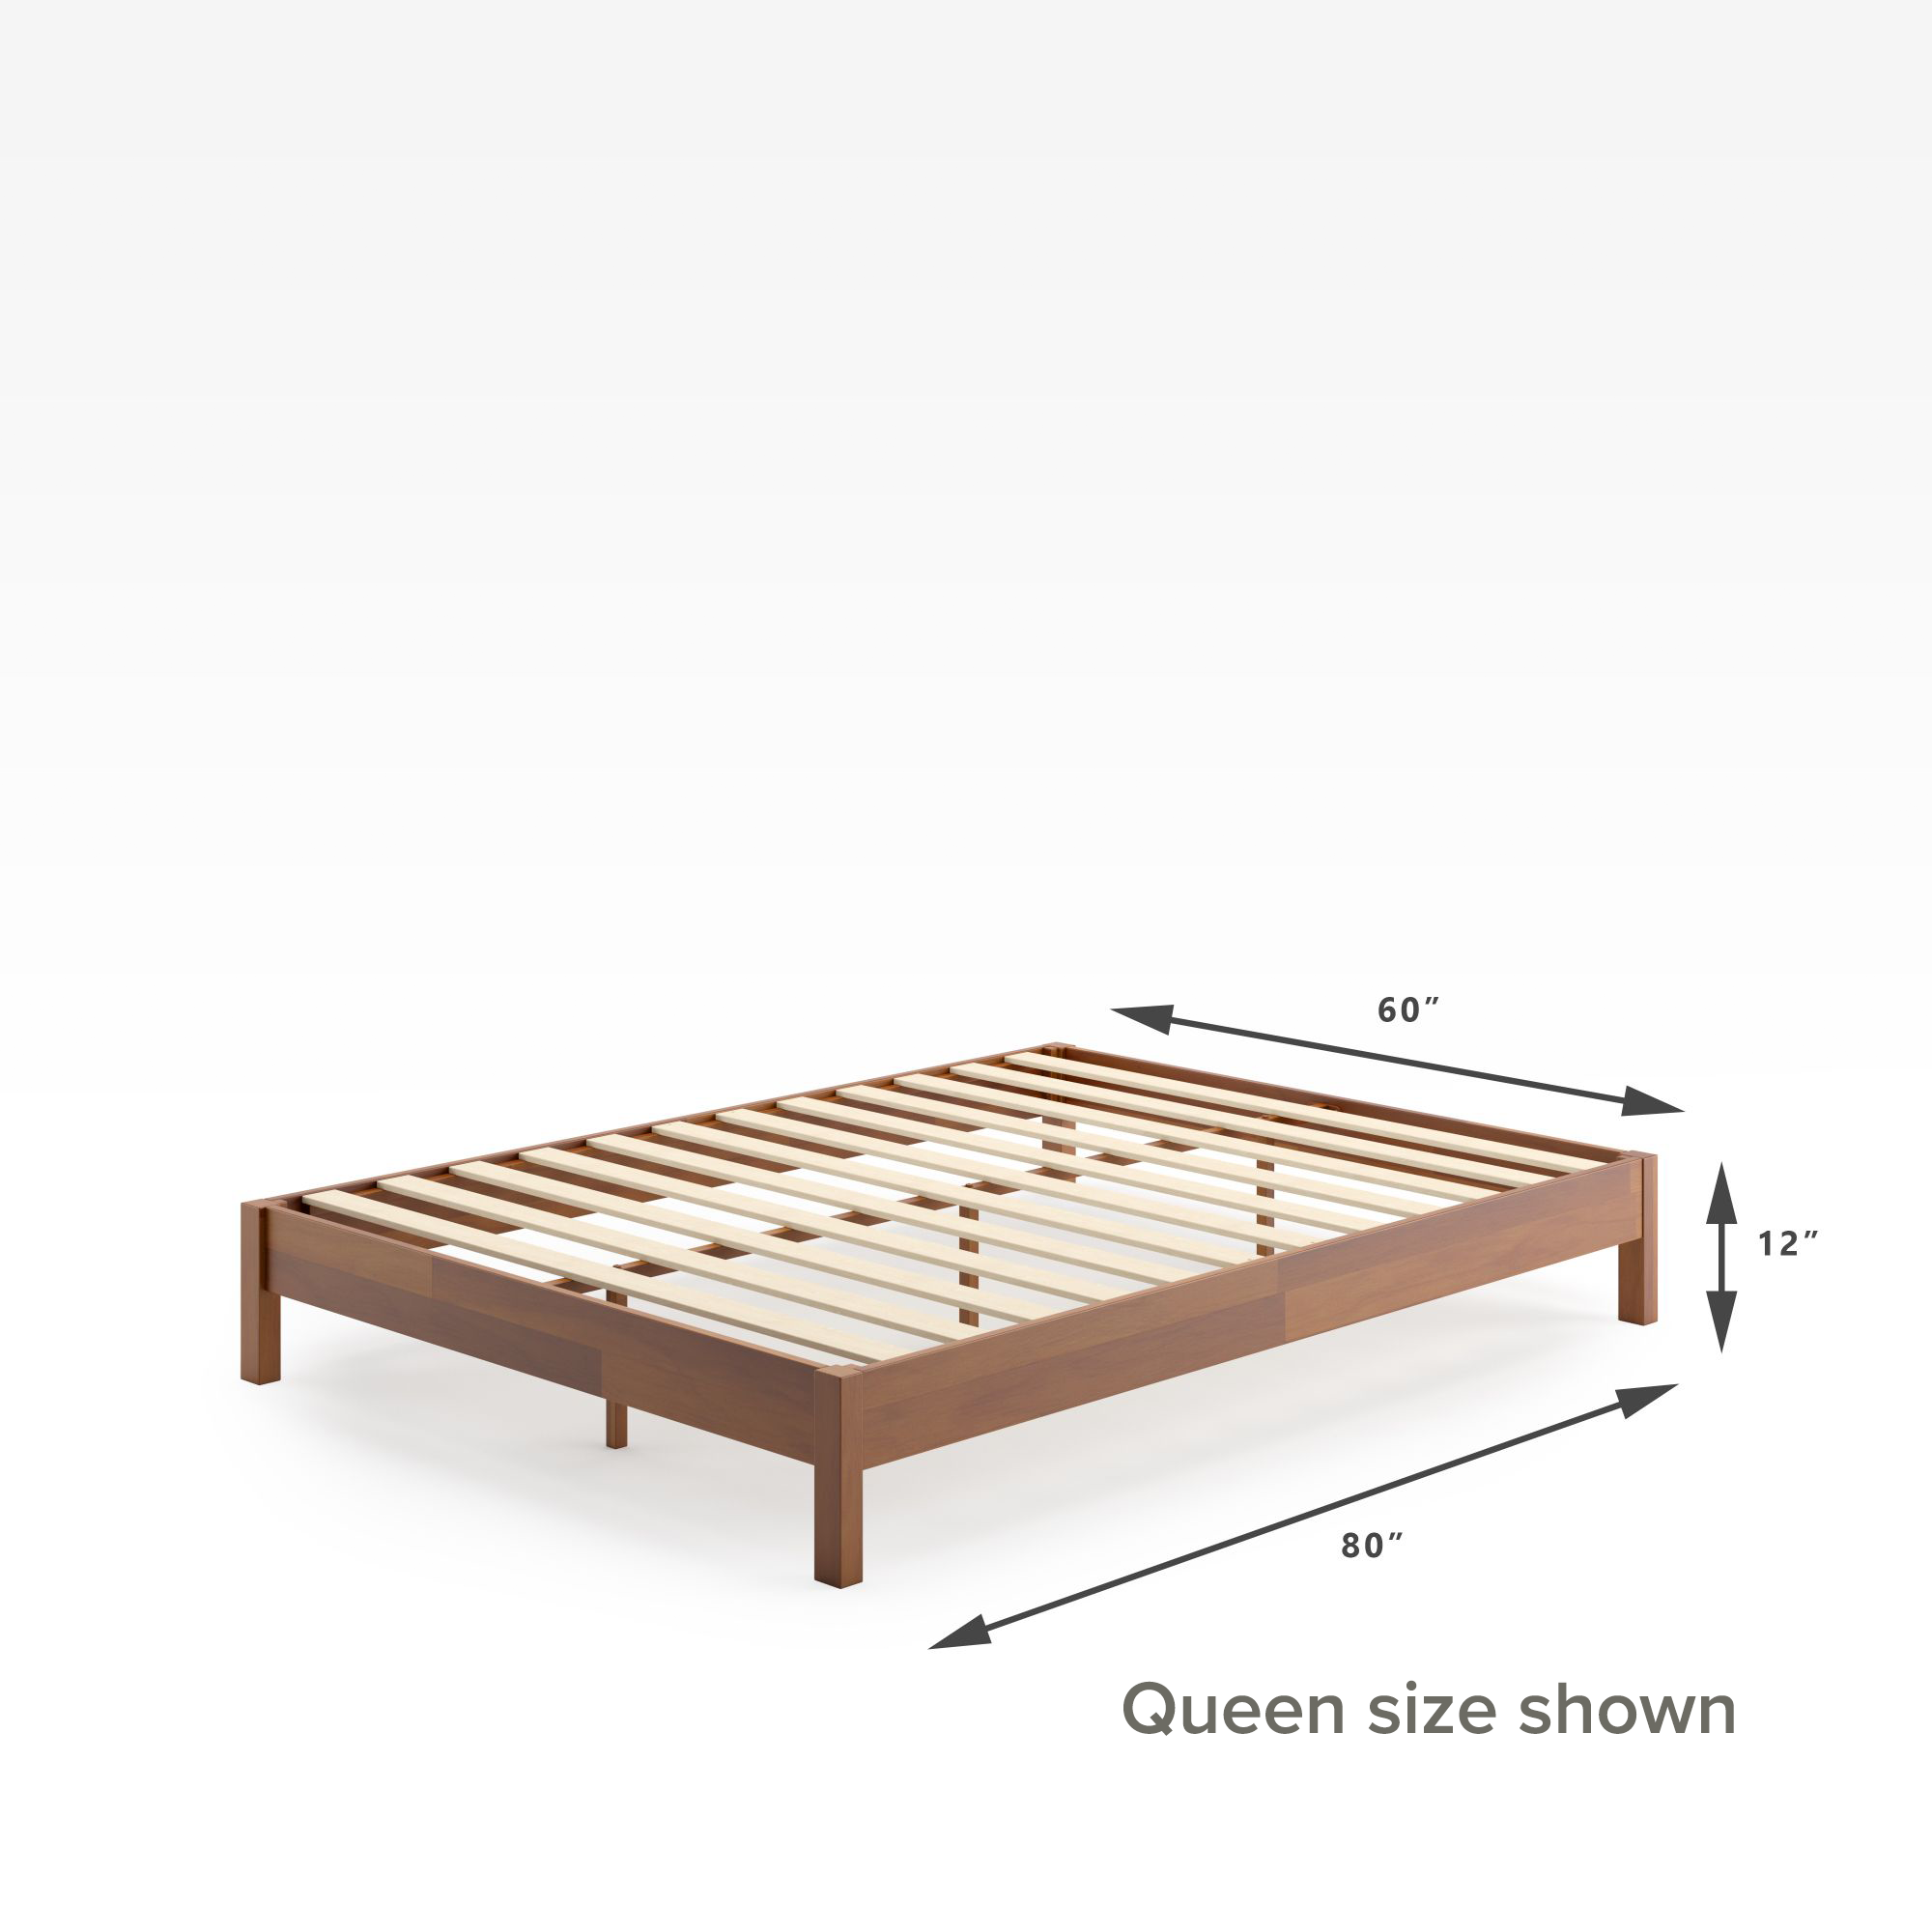 Wen Wood Deluxe Platform Bed Frame queen size dimensions